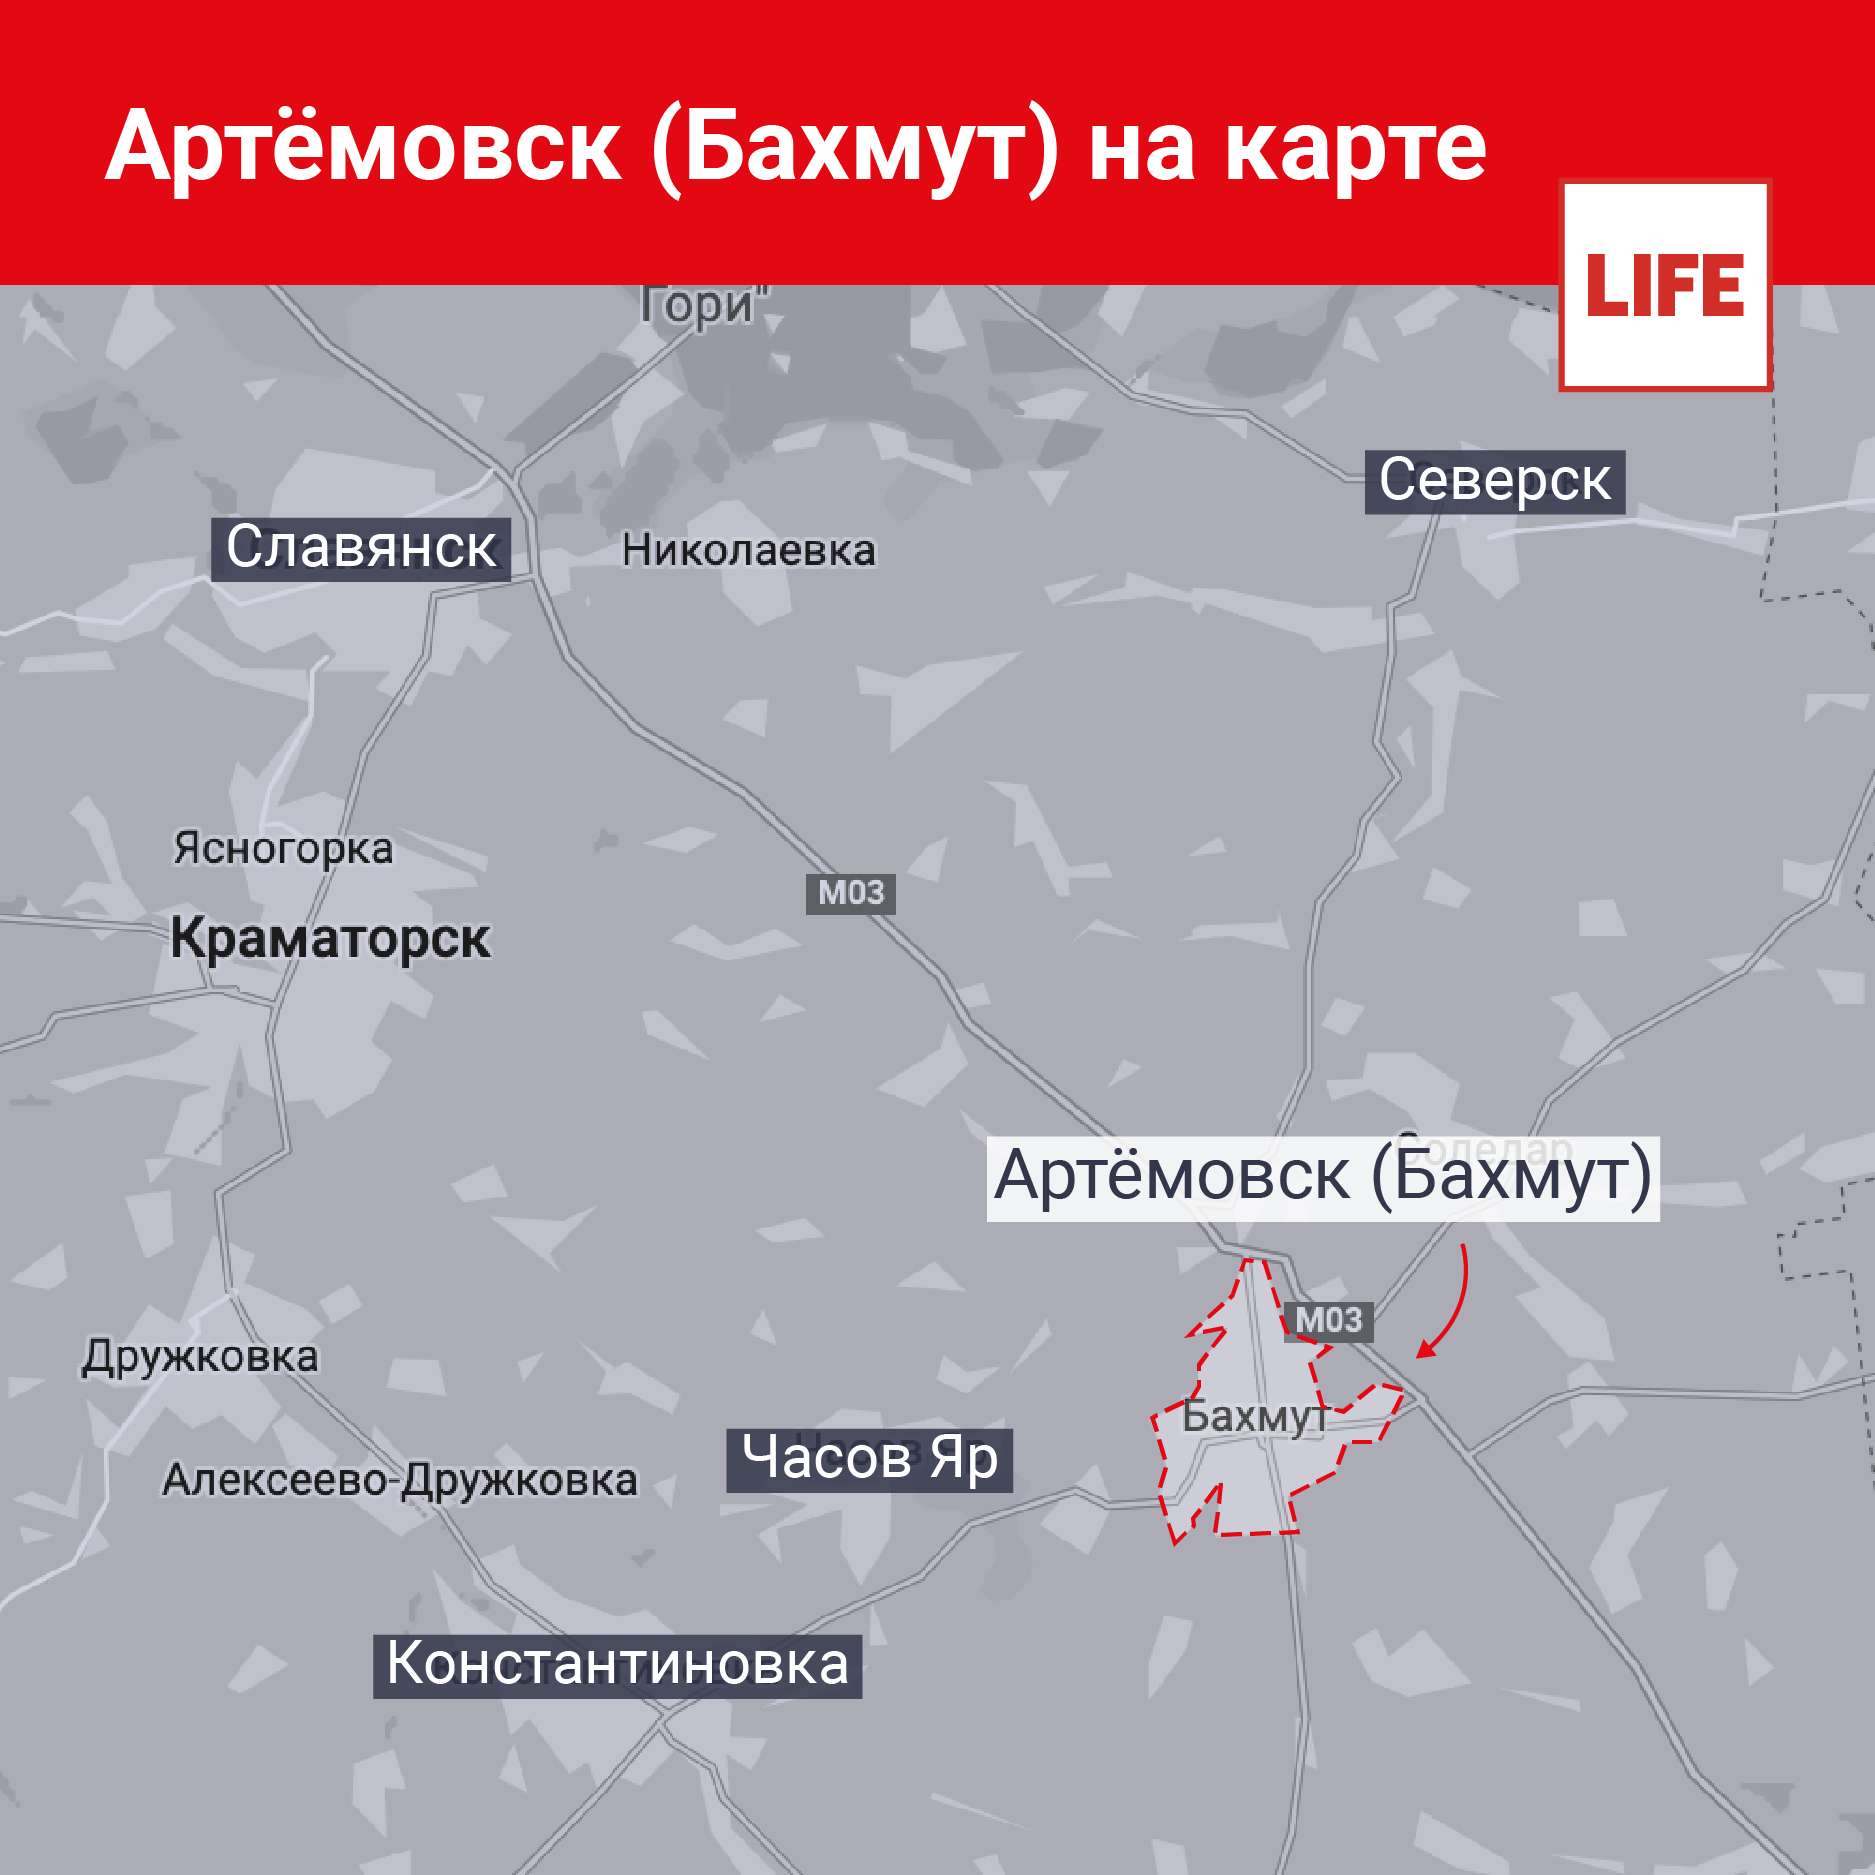 Артёмовск (Бахмут) на карте. Инфографика © LIFE